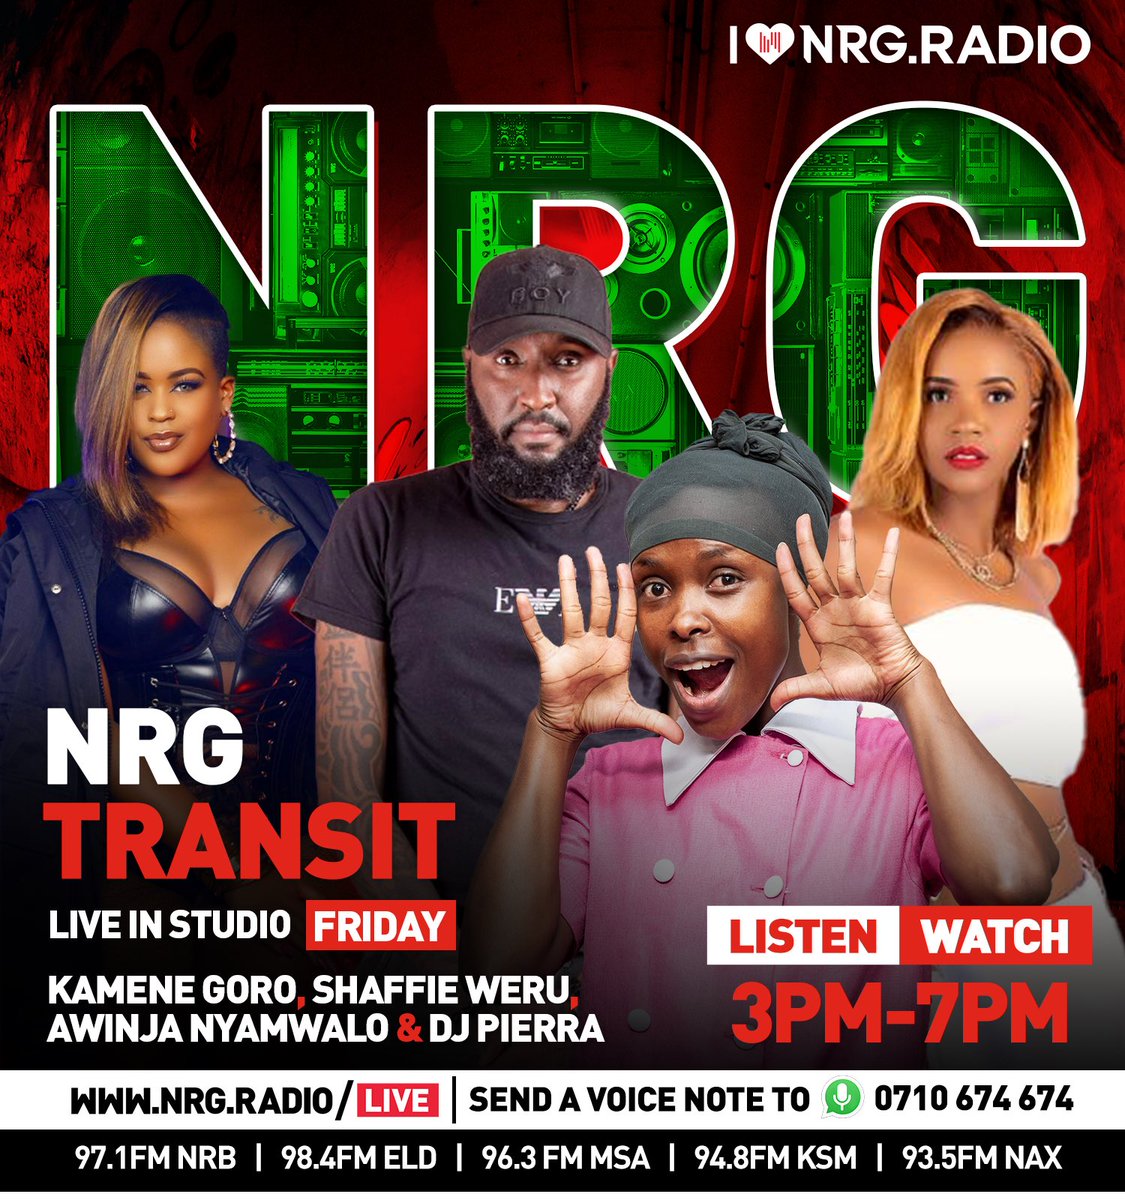 NRG Radio on Twitter: "Tupo site! Tupooo site buanaaaa🔥🔥🔥 The gang is  all set for #NRGTransit Mko? Represent mtaa yako tukisonga @KameneGoro  @ShaffieWeru @AwinjaNyamwalo @PierraM #nrgsexy5 https://t.co/HG4RxDT2go" /  Twitter